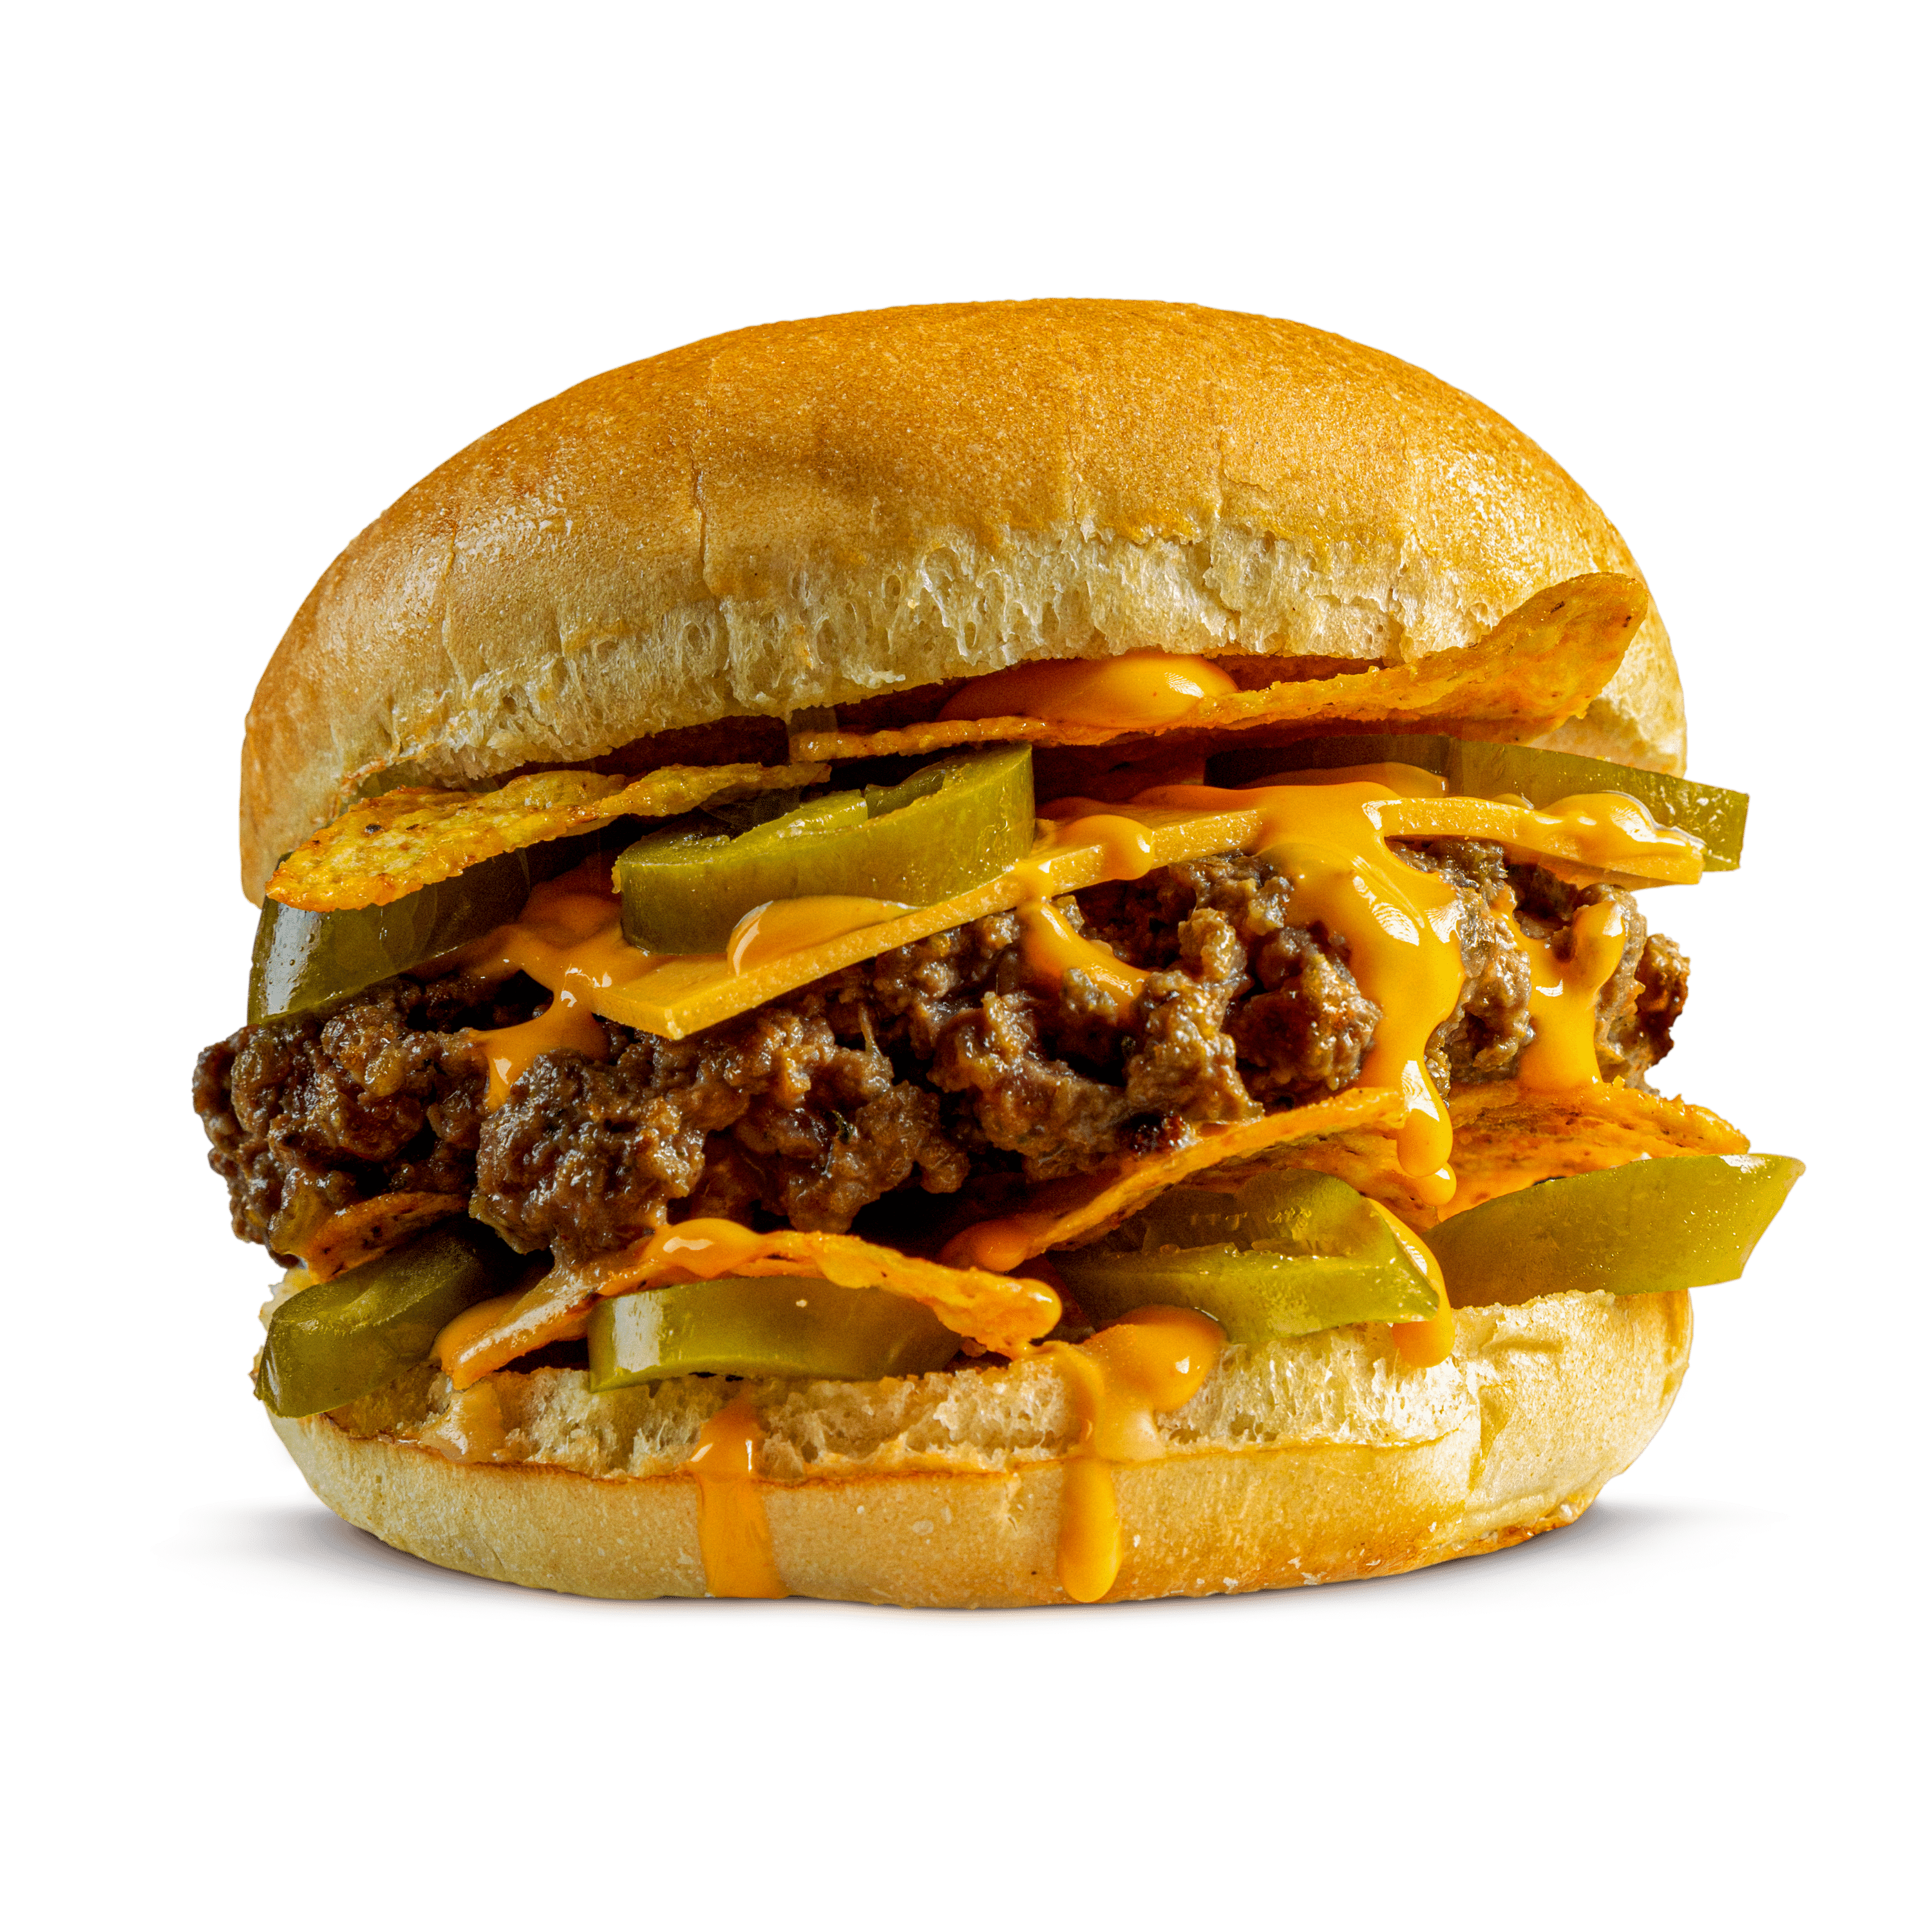 The Beef Nacho Melt Burger - The tastiest way to enjoy nachos!